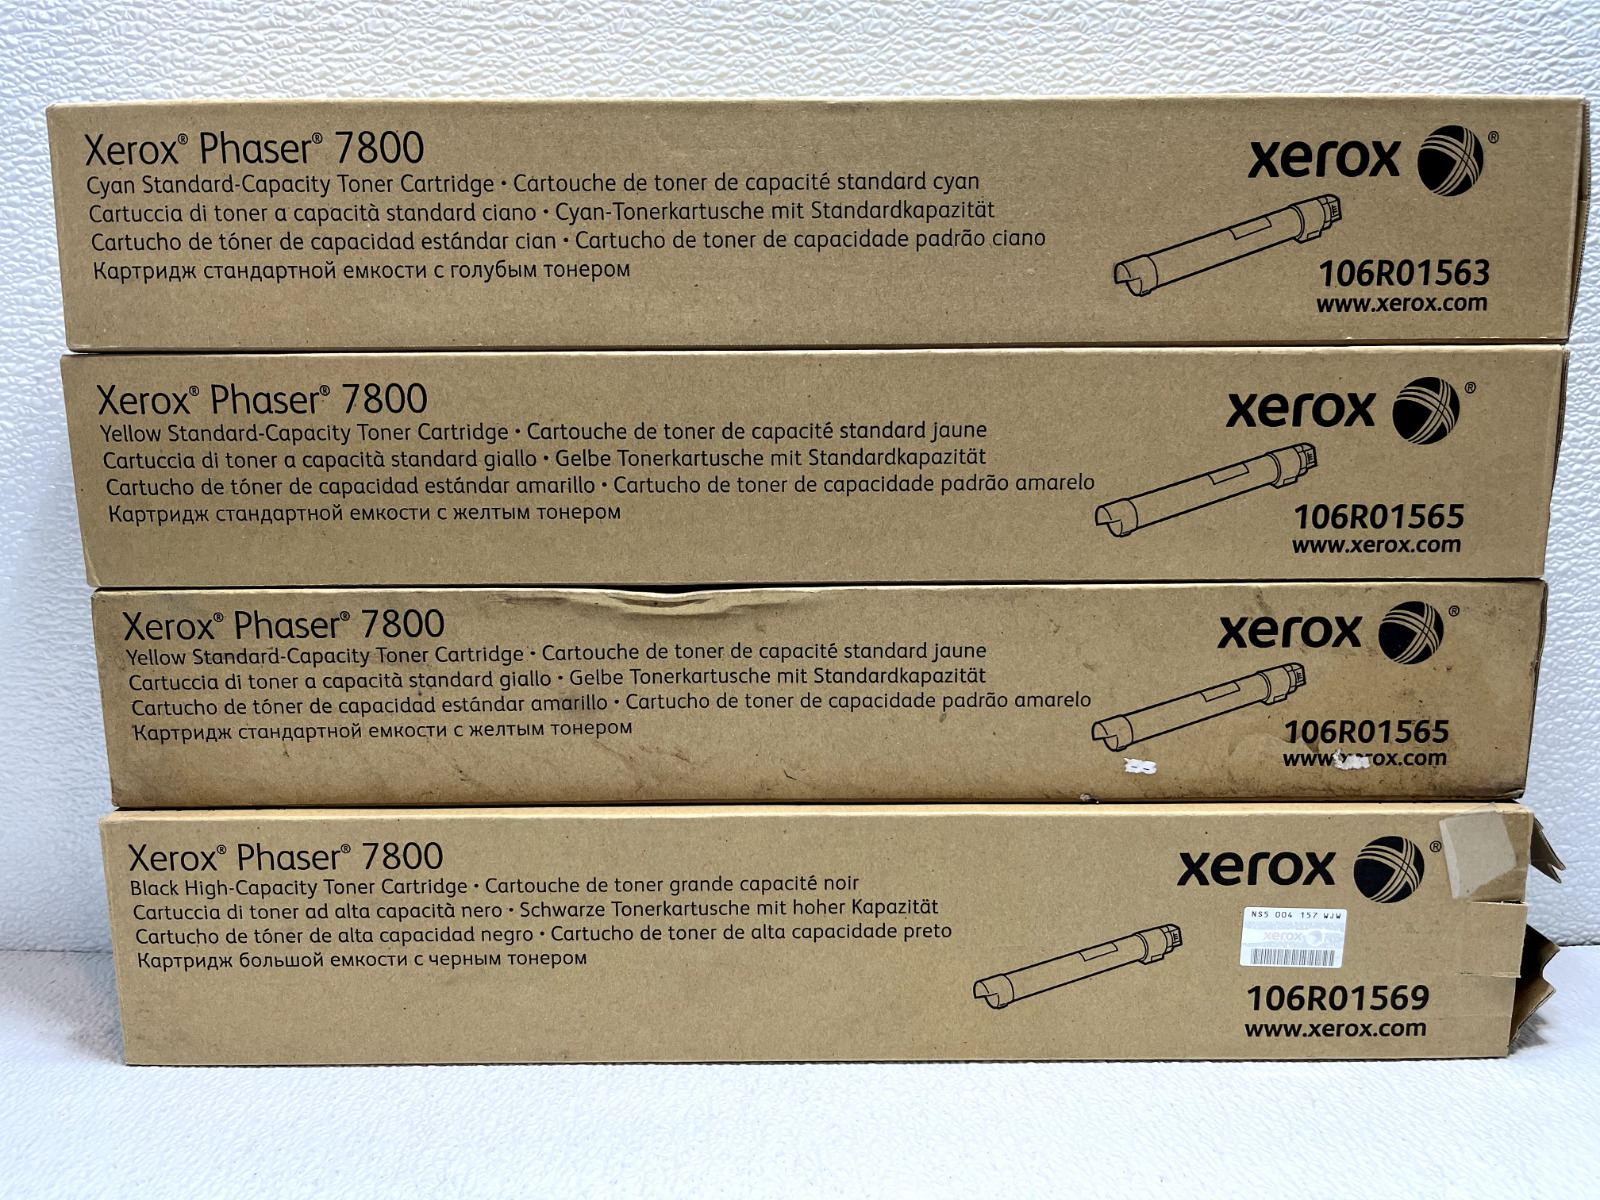 Lot of 4 EMPTY EMPTY EMPTY Xerox 7800 Toner Cartridges